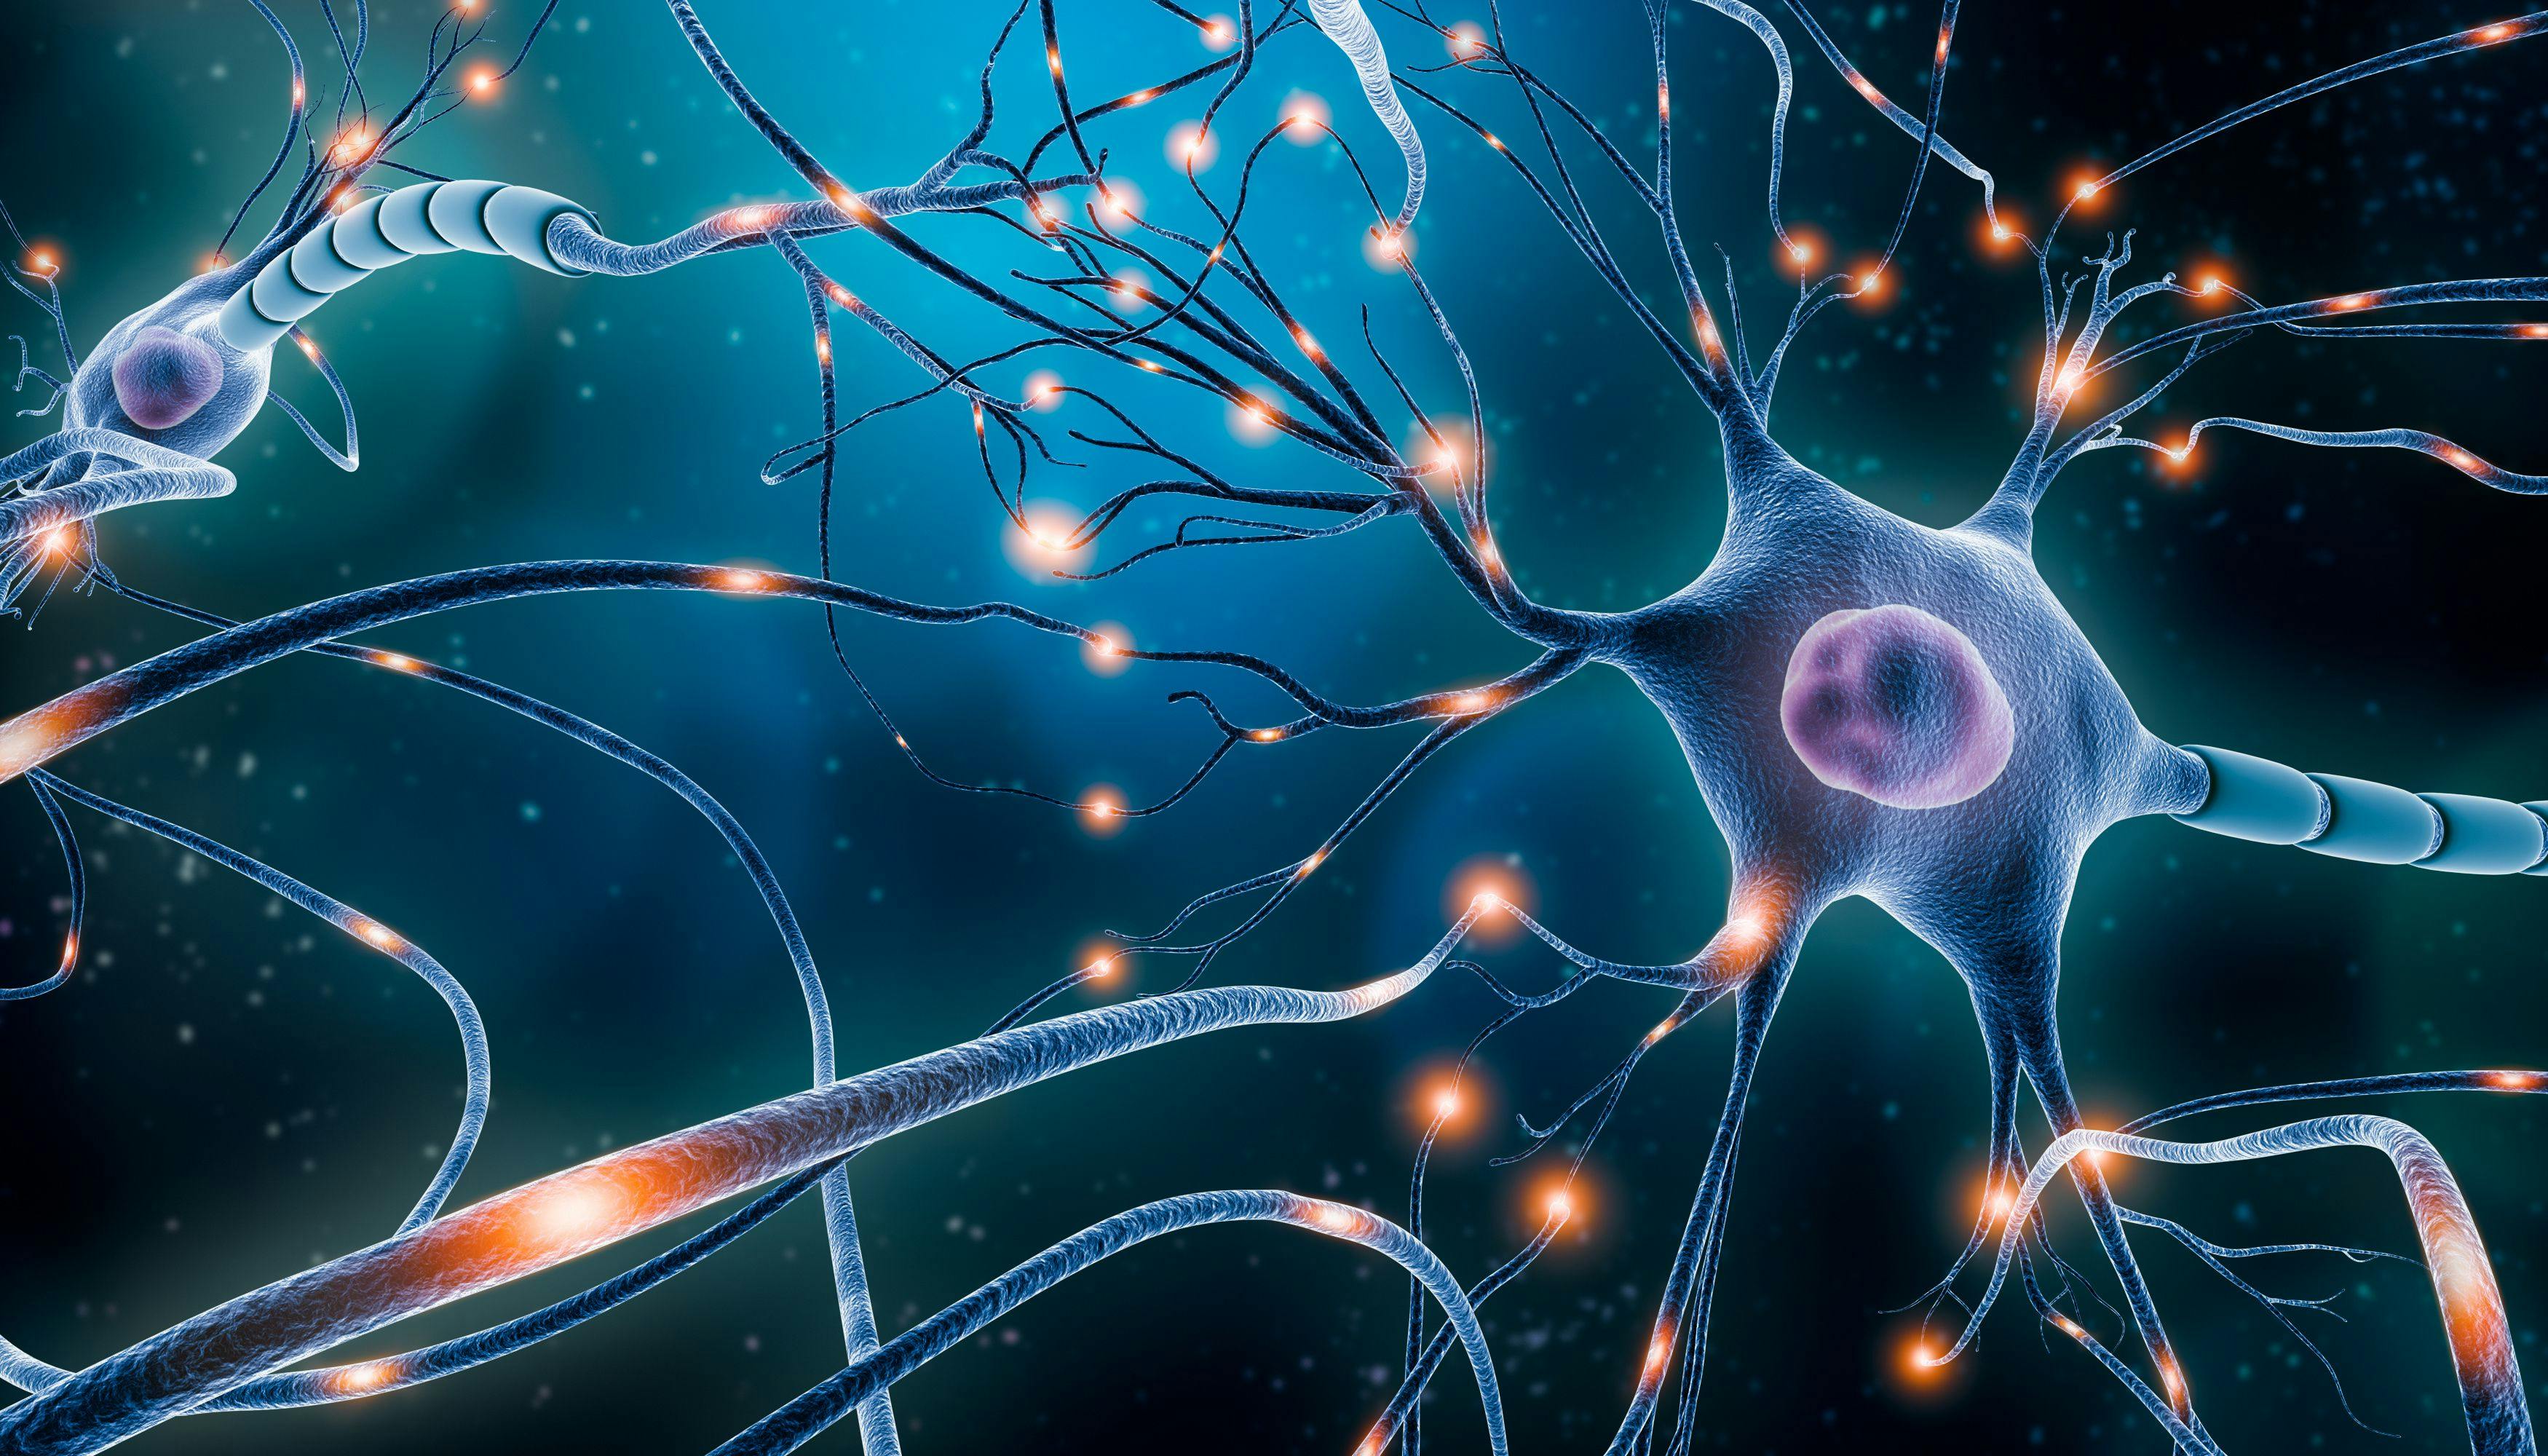 Neuron cells, brain activity -- Image credit: Matthieu | stock.adobe.com